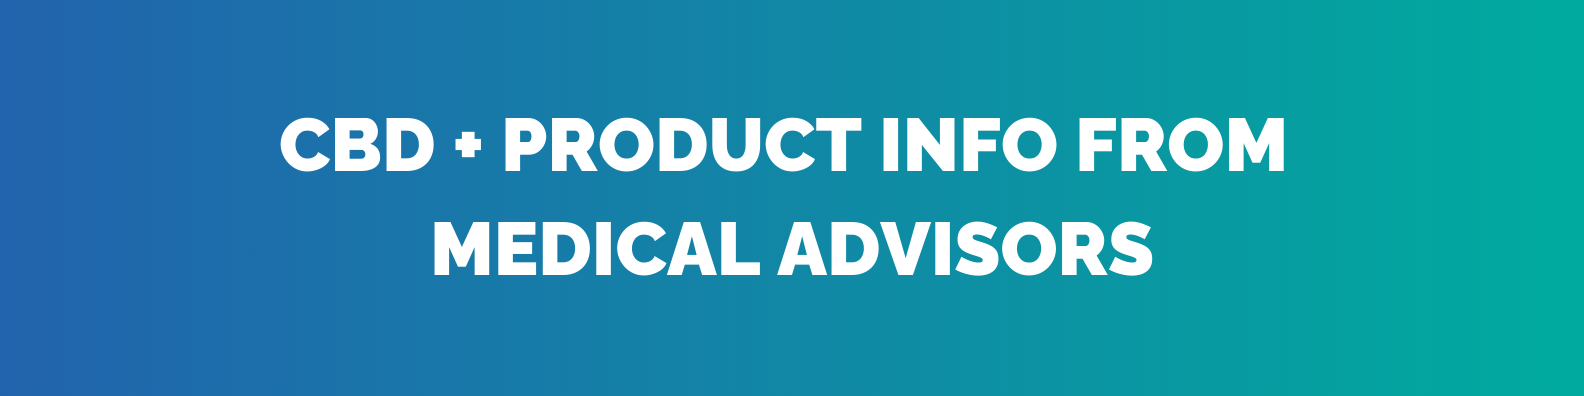 CBD + Product Info From Medical Advisors